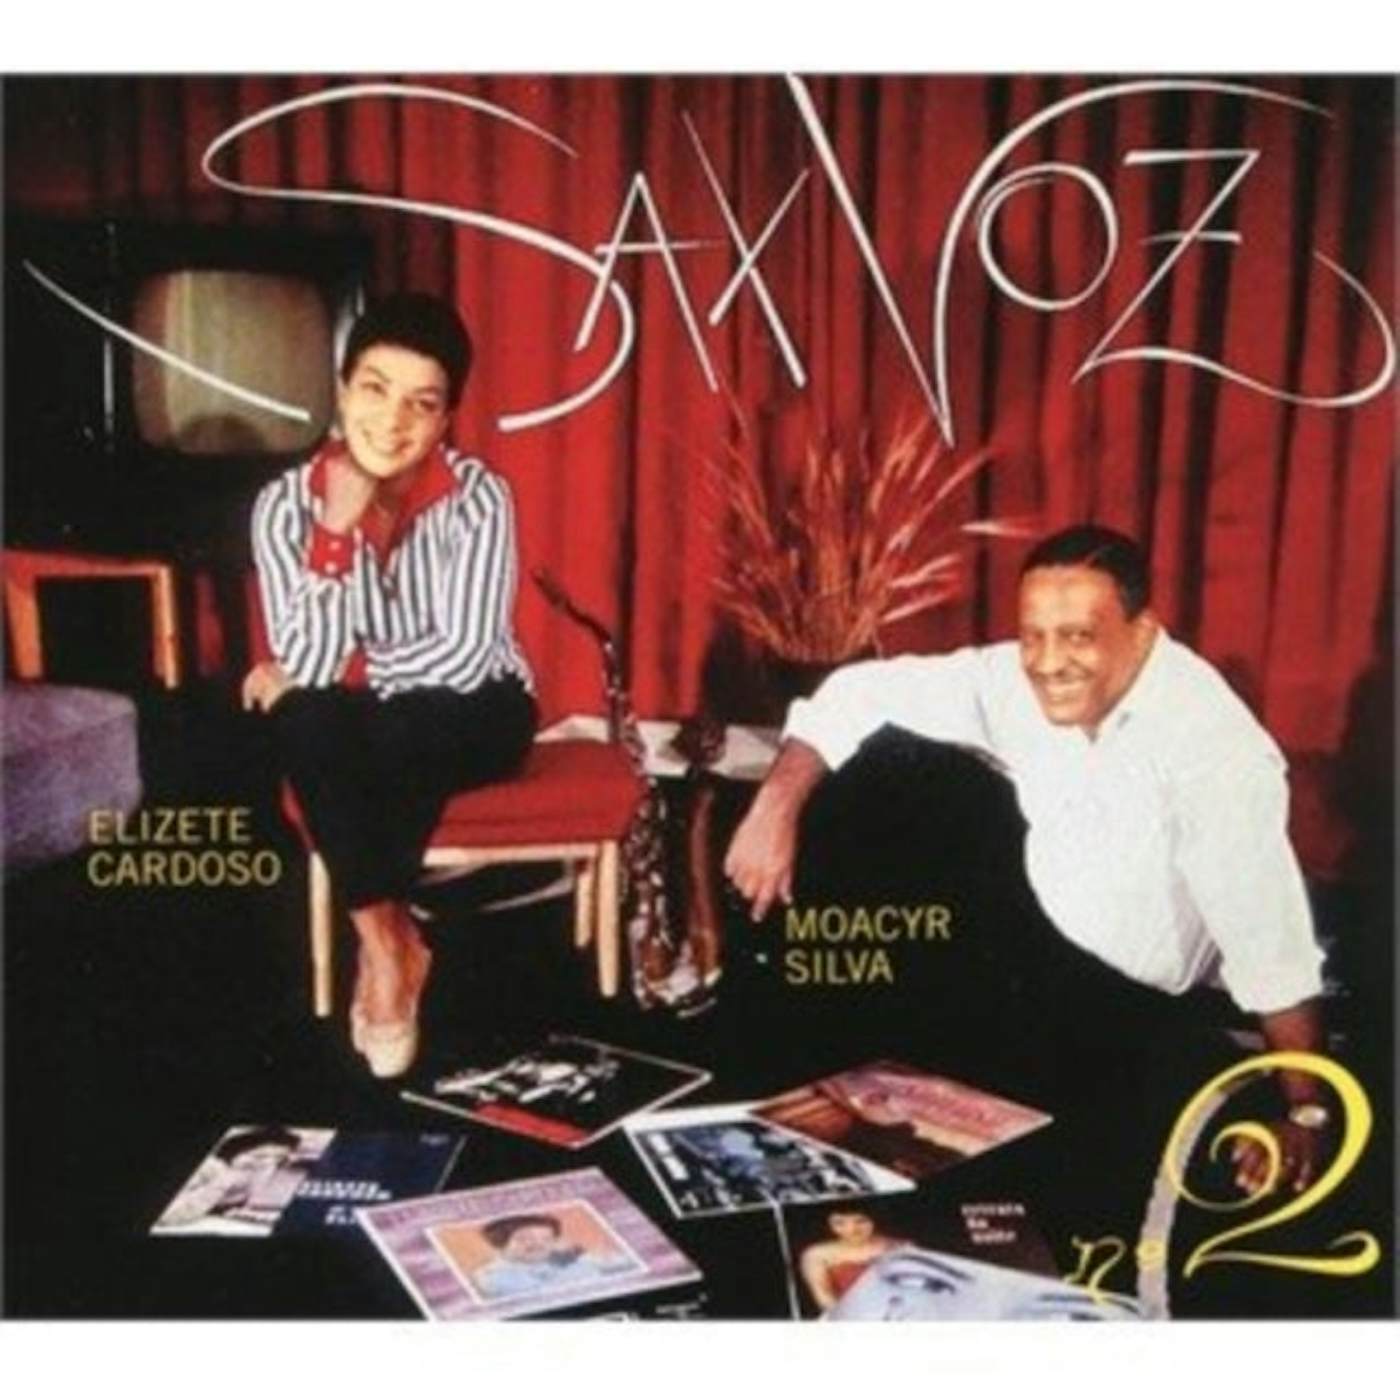 Elizete Cardoso / Moacyr Silva CD - Sax Voz No. 2 / Sax Voz